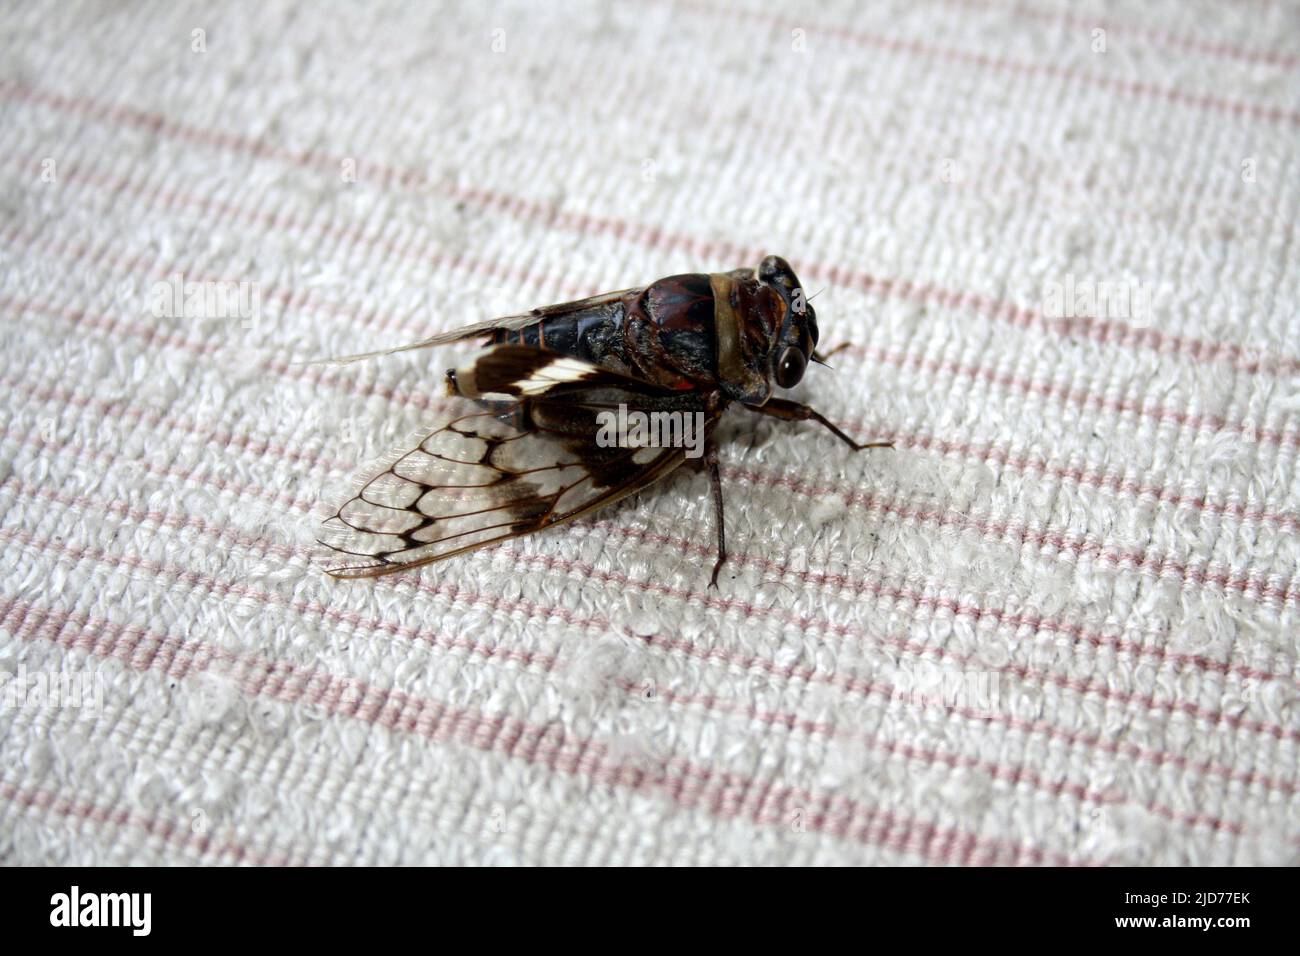 Cicada (Platypleura octoguttata) sitting on a wire mesh : (pix SShukla) Stock Photo